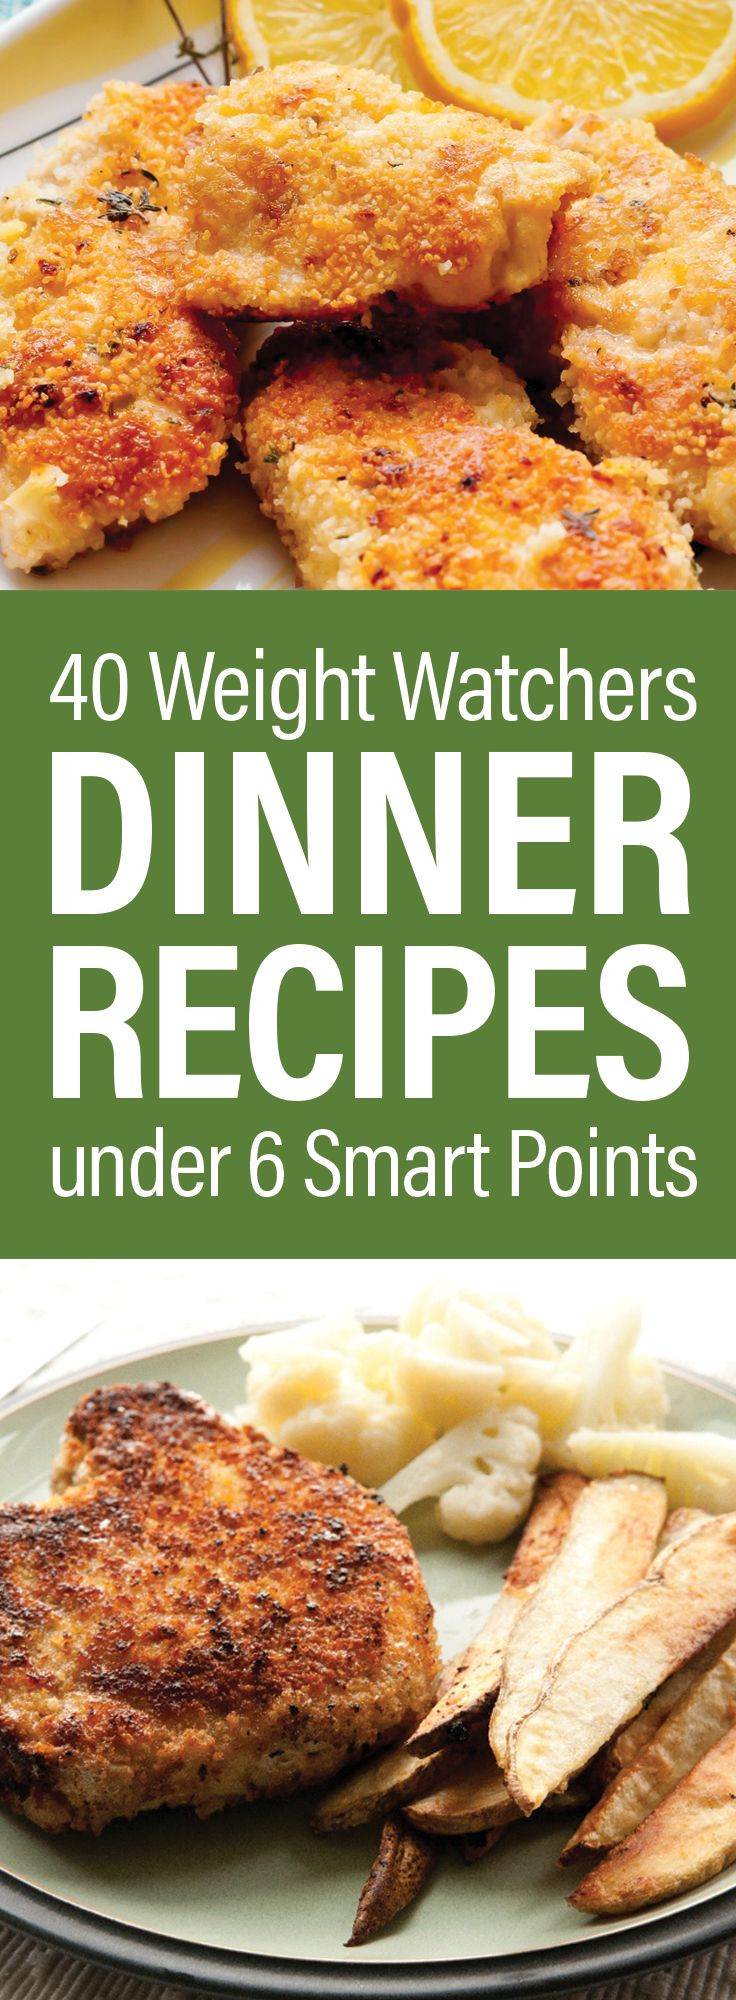 Weight Watchers Dinner Recipes
 40 Weight Watchers Dinner Recipes Under 6 SmartPoints